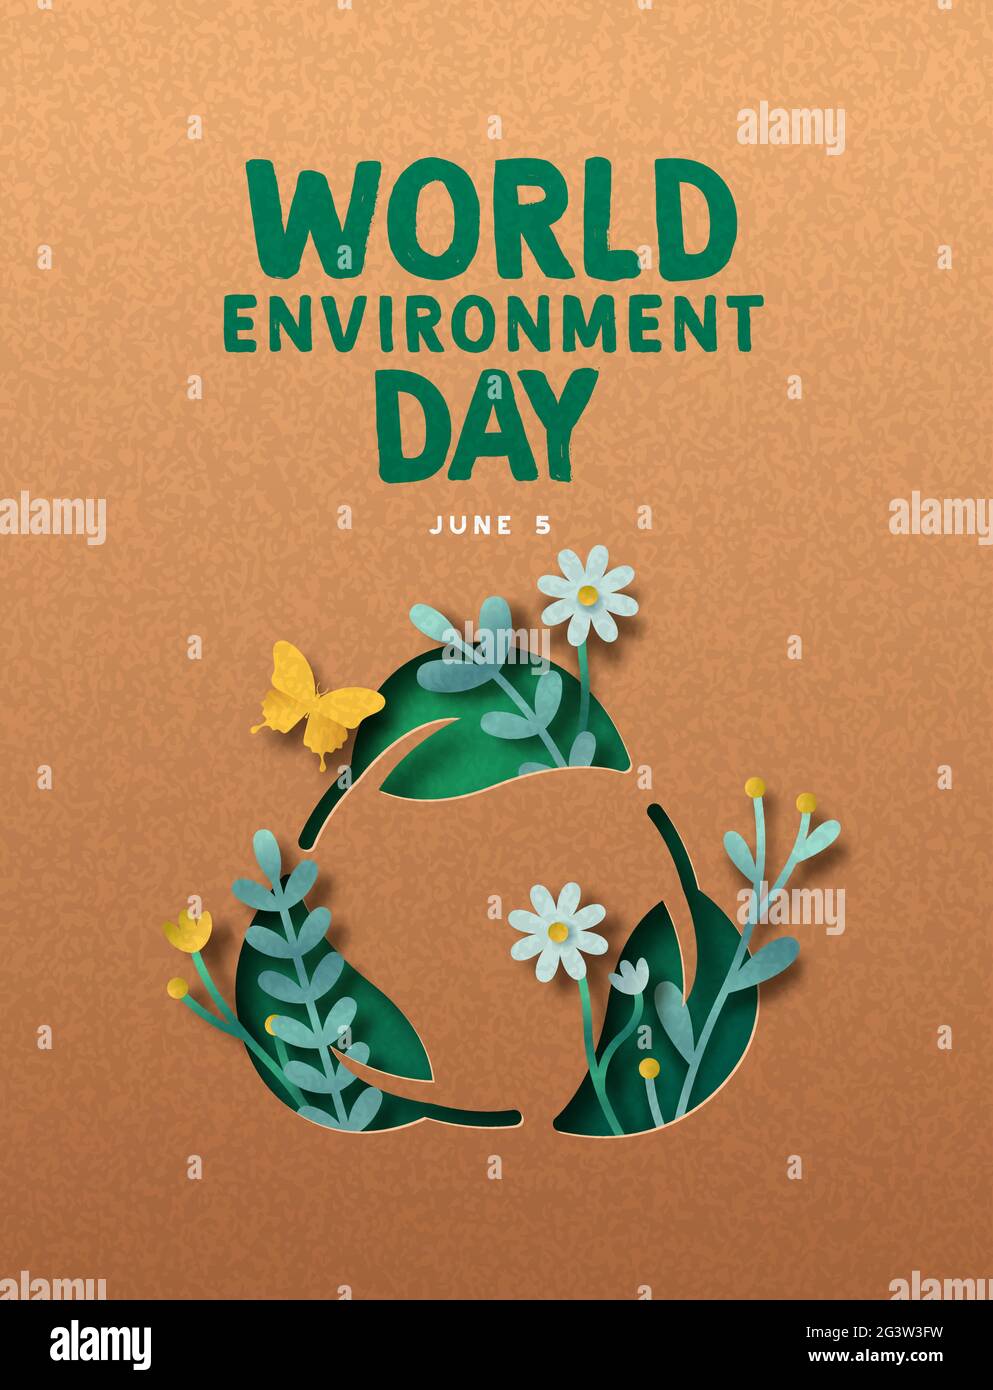 Welt Umwelt Tag Papercut Grußkarte Illustration von grünen Pflanze Blatt recyceln Symbol mit 3d-Papier Handwerk Natur Dekoration. Juni 5 Ökologie Auto Stock Vektor